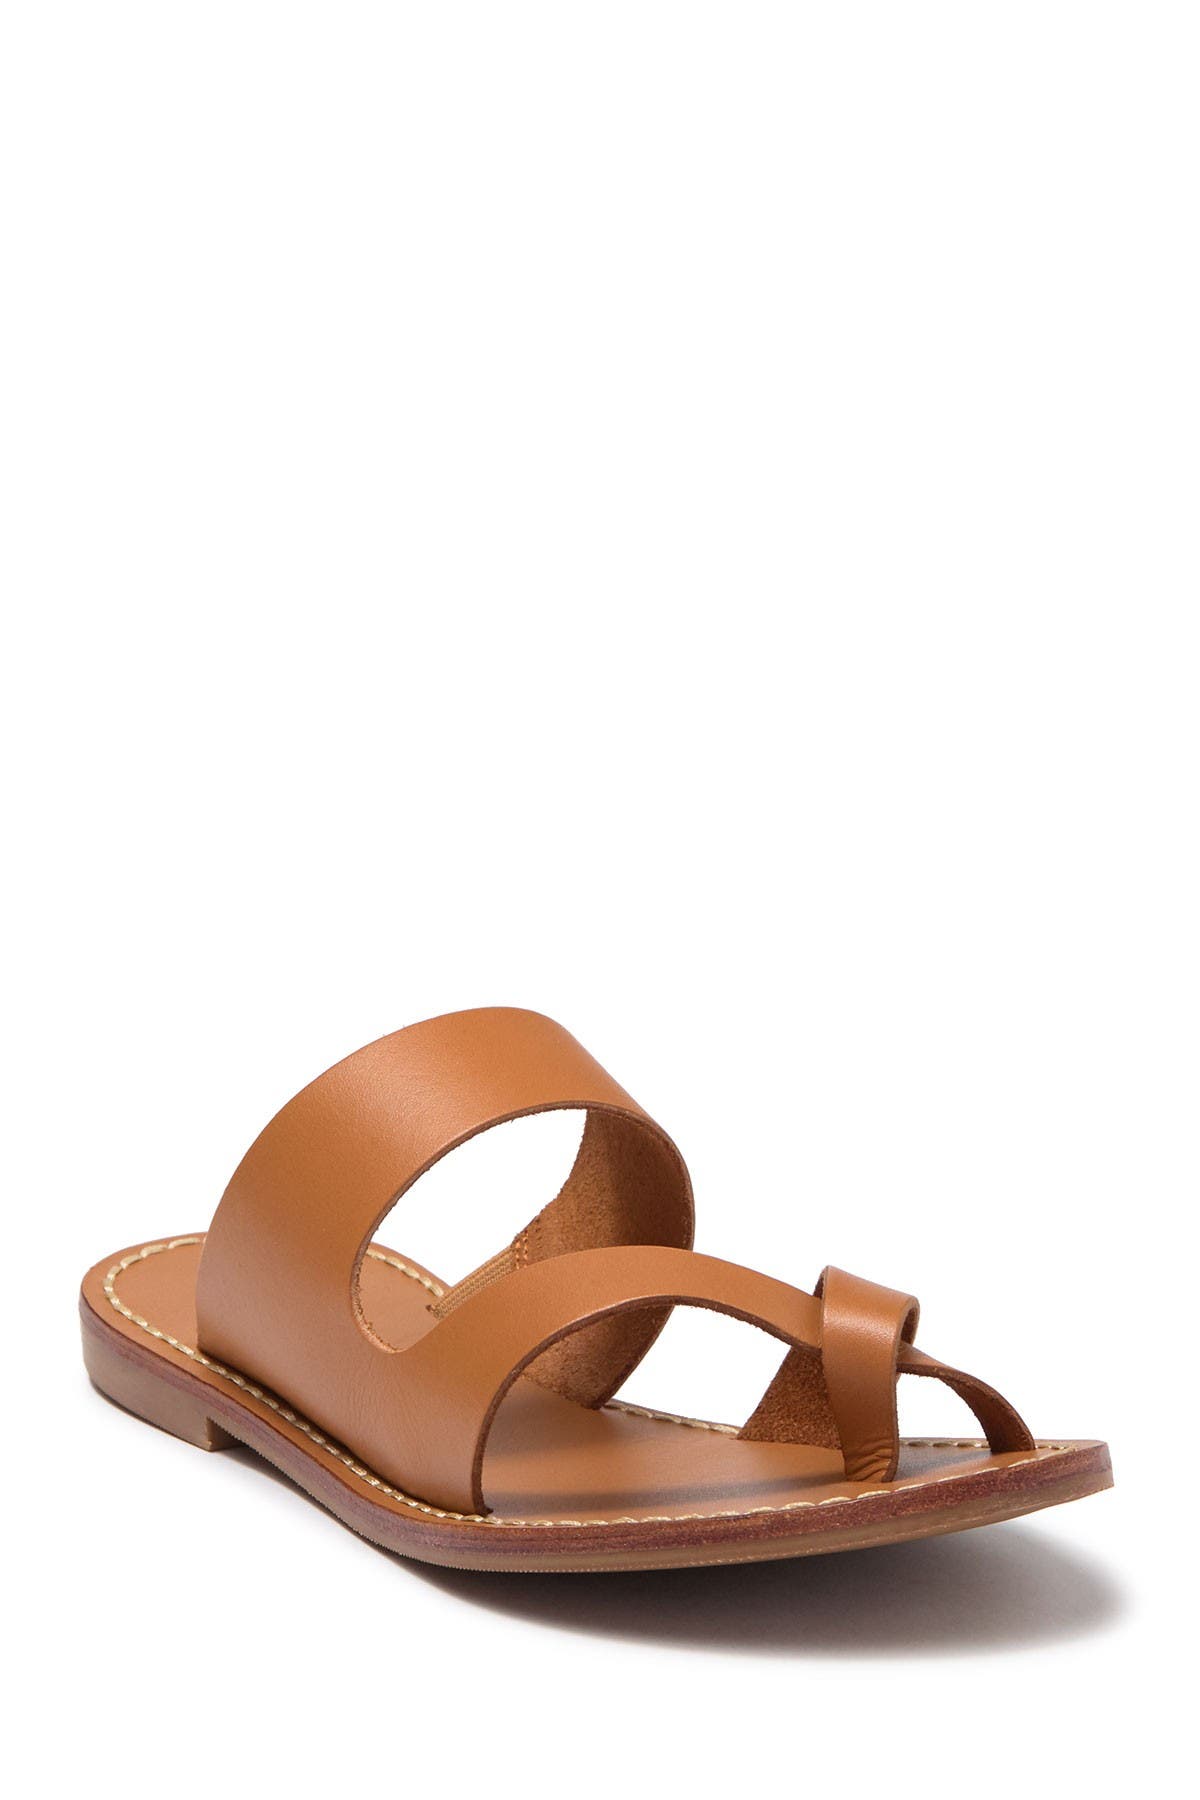 Soludos | Mila Leather Slide Sandal 